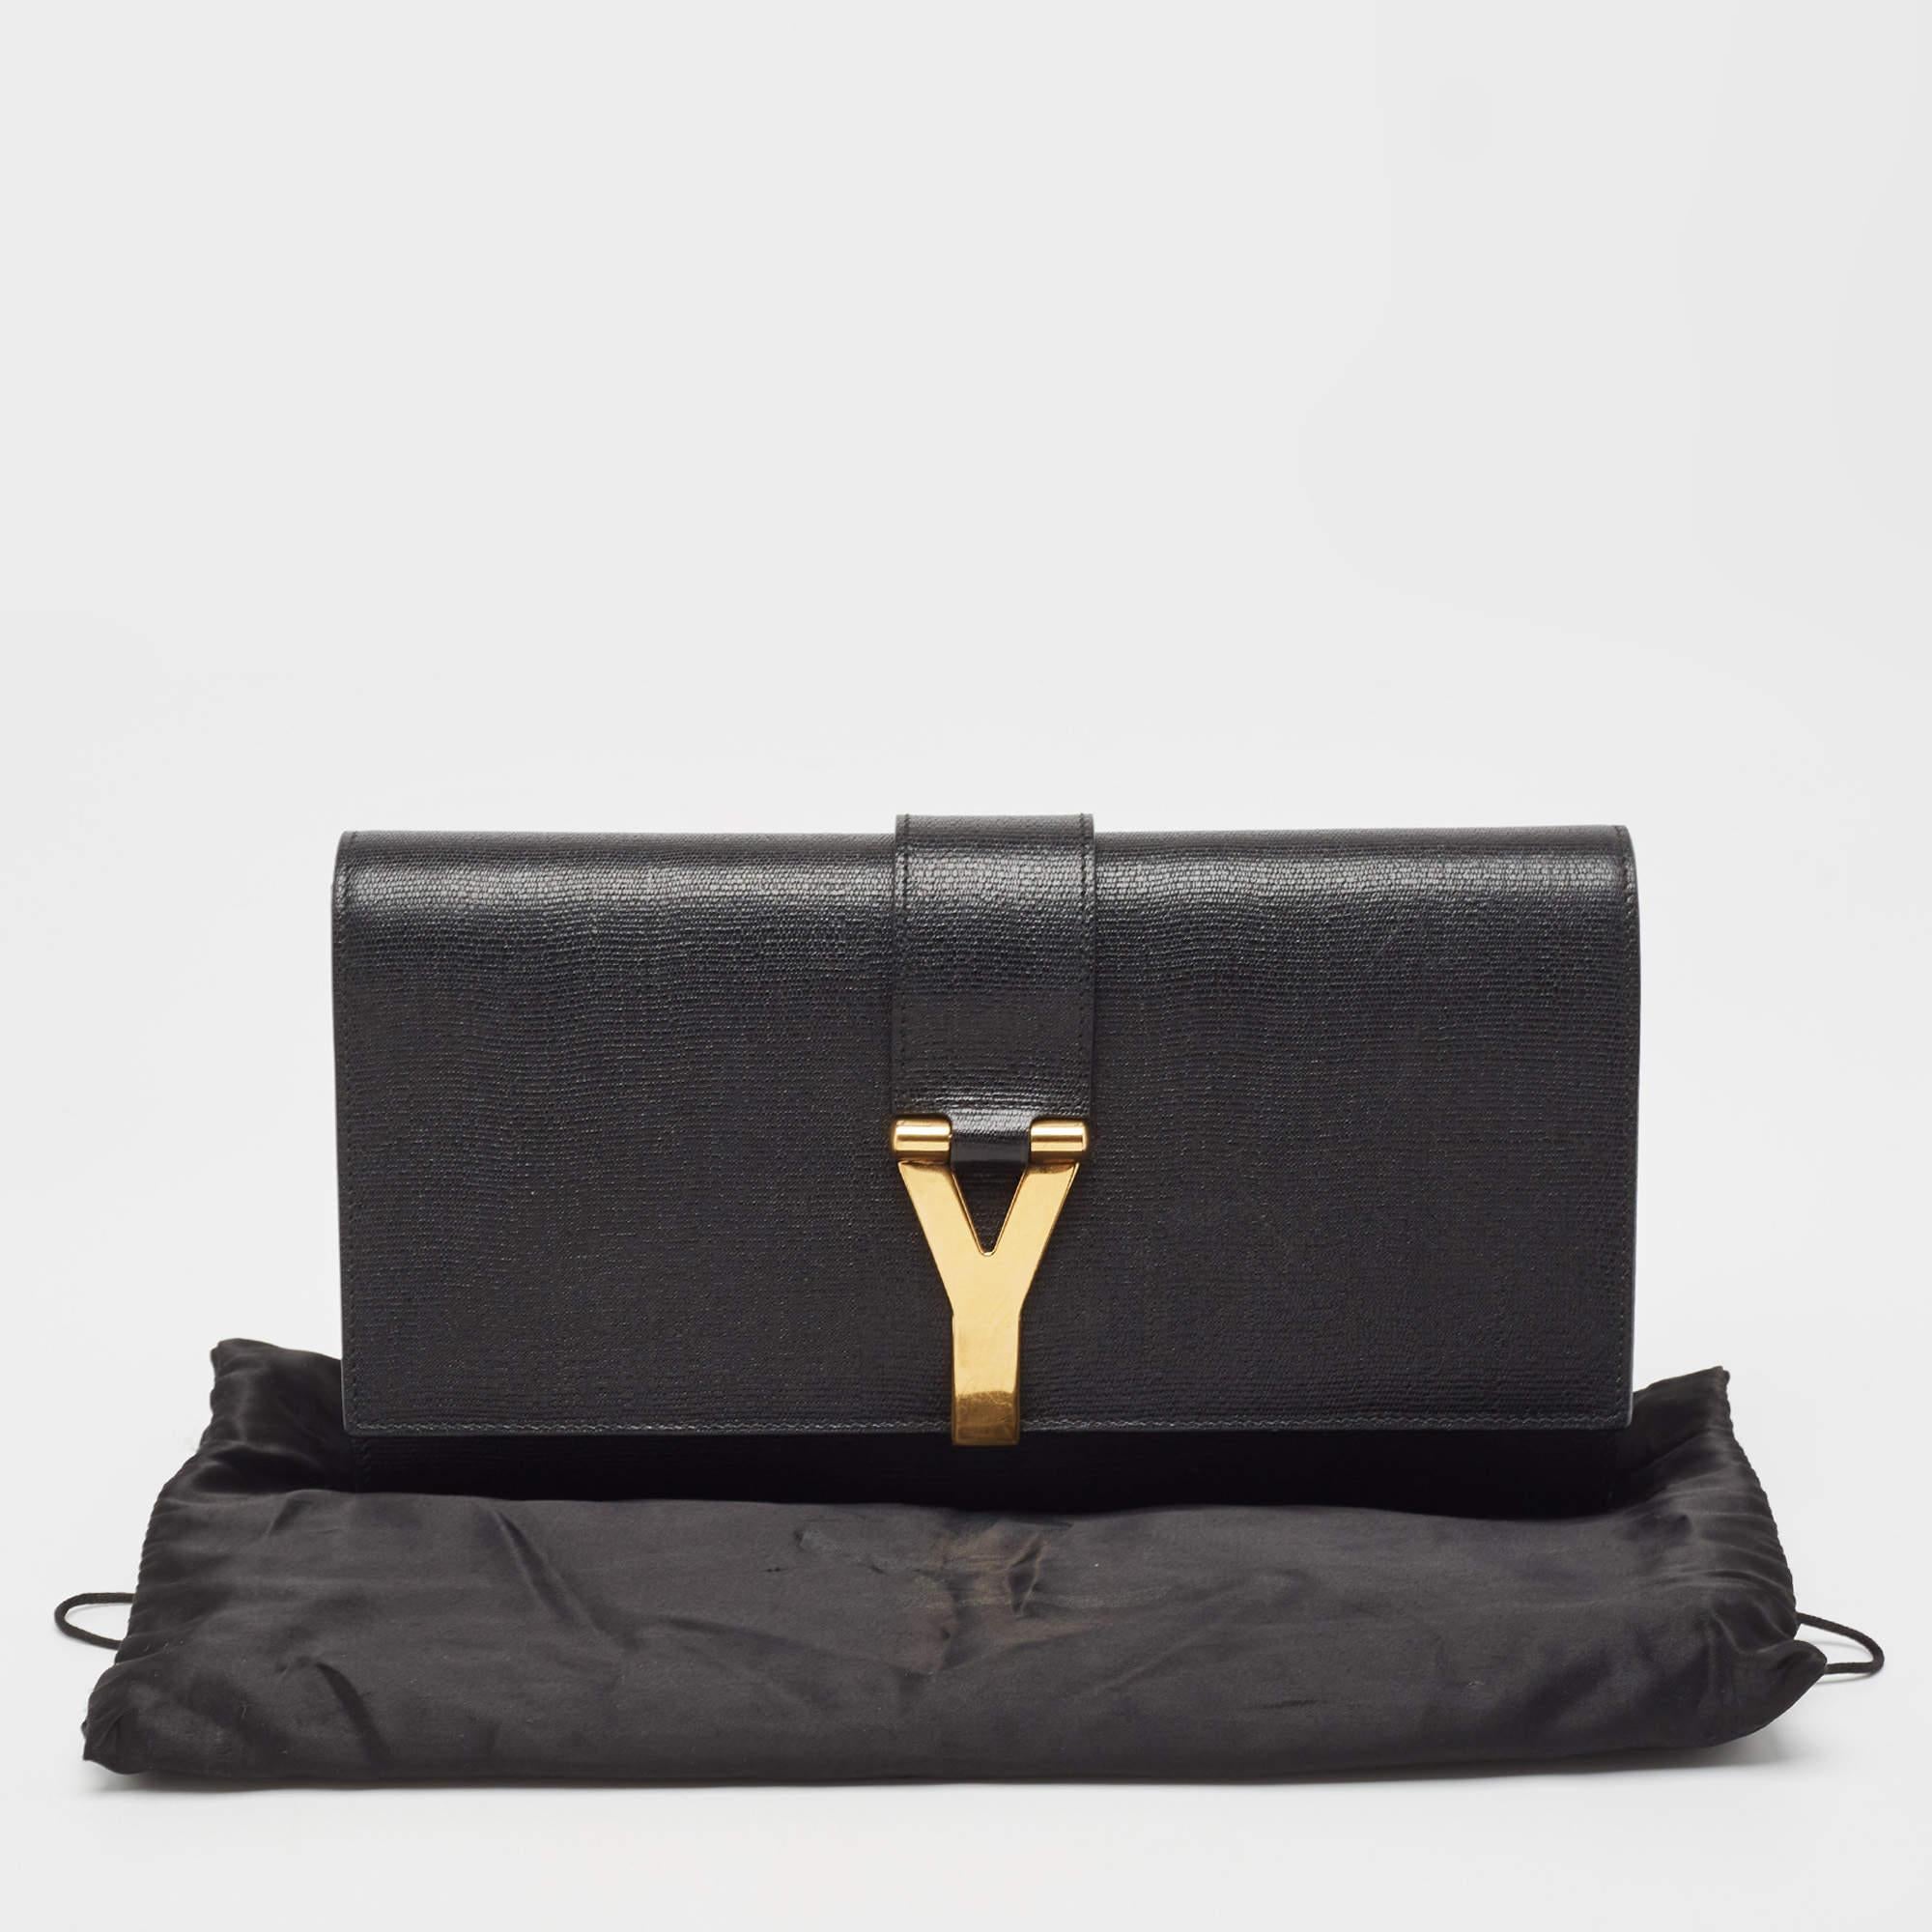 Yves Saint Laurent Black Leather Y-Ligne Clutch For Sale 10